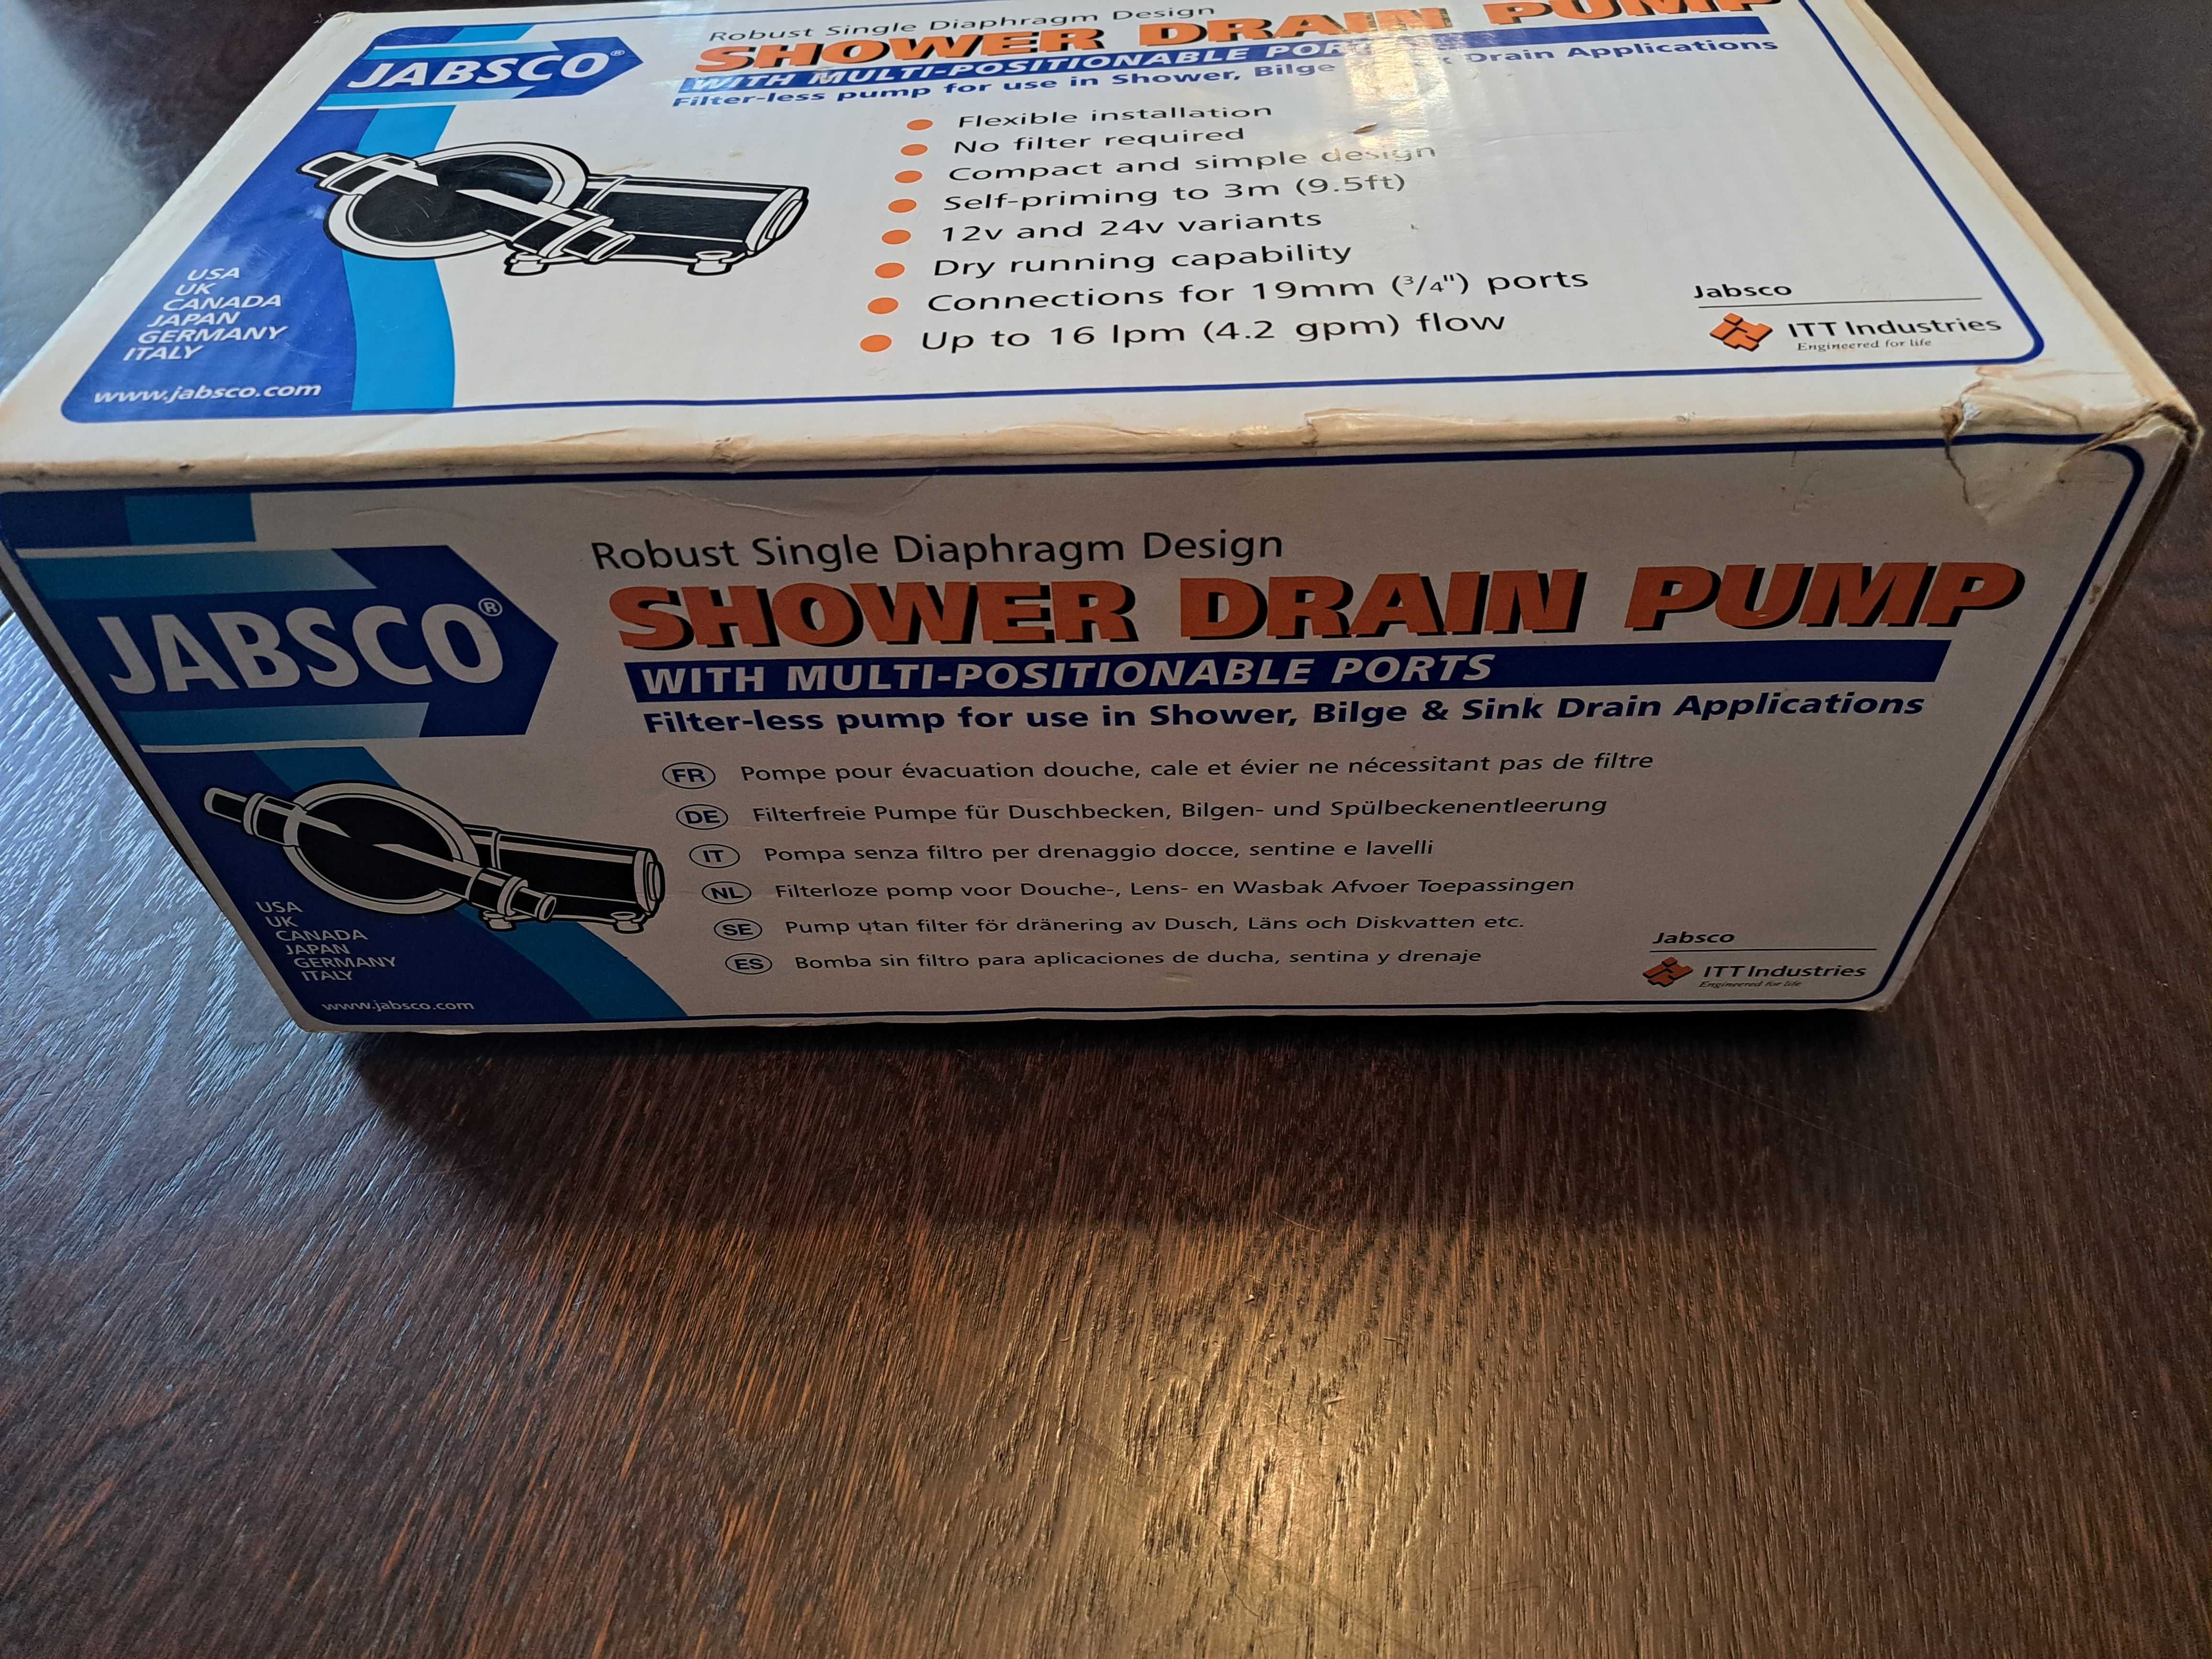 Pompa Jabsco Filterless Bilger - Sink - Shower Drain Pump